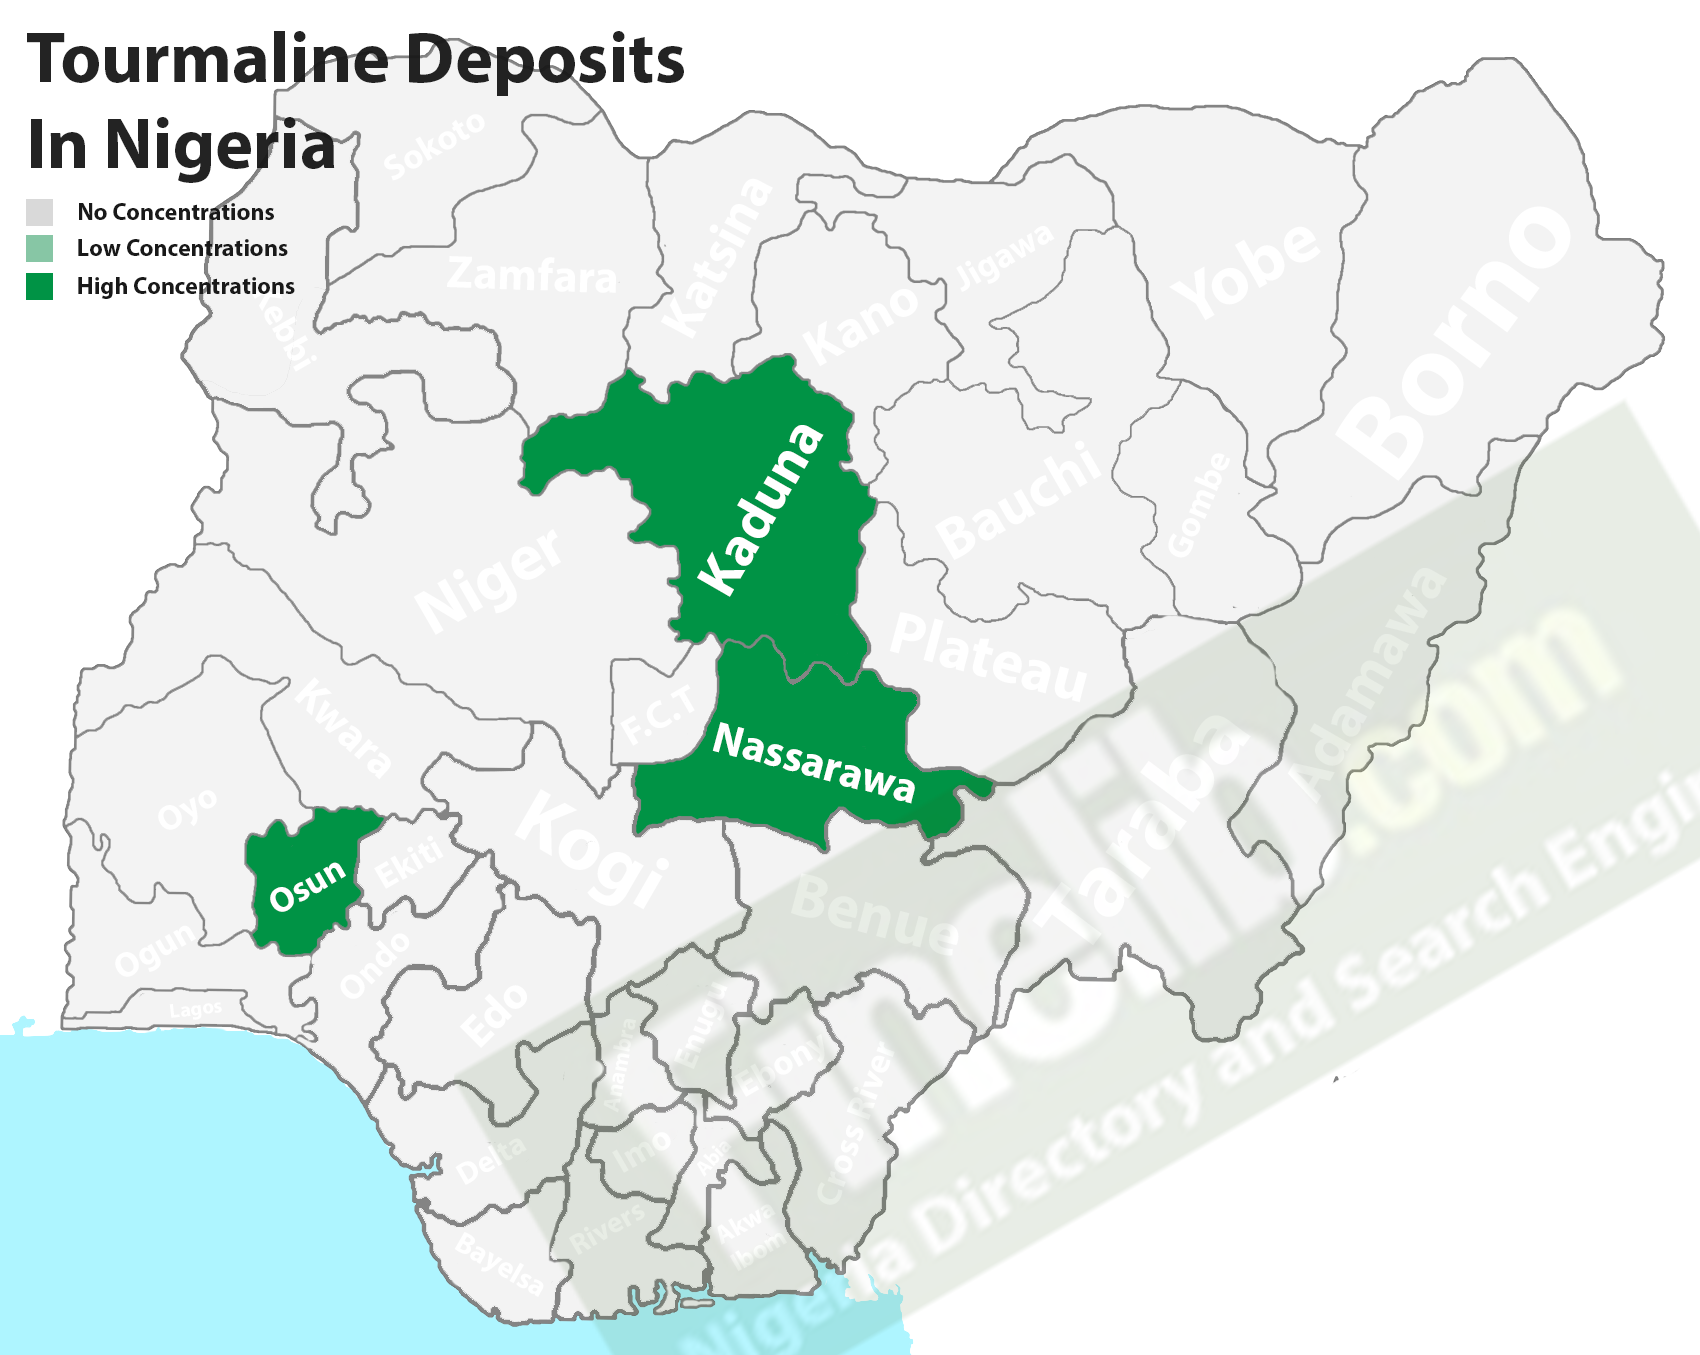 Tourmaline deposits in Nigeria